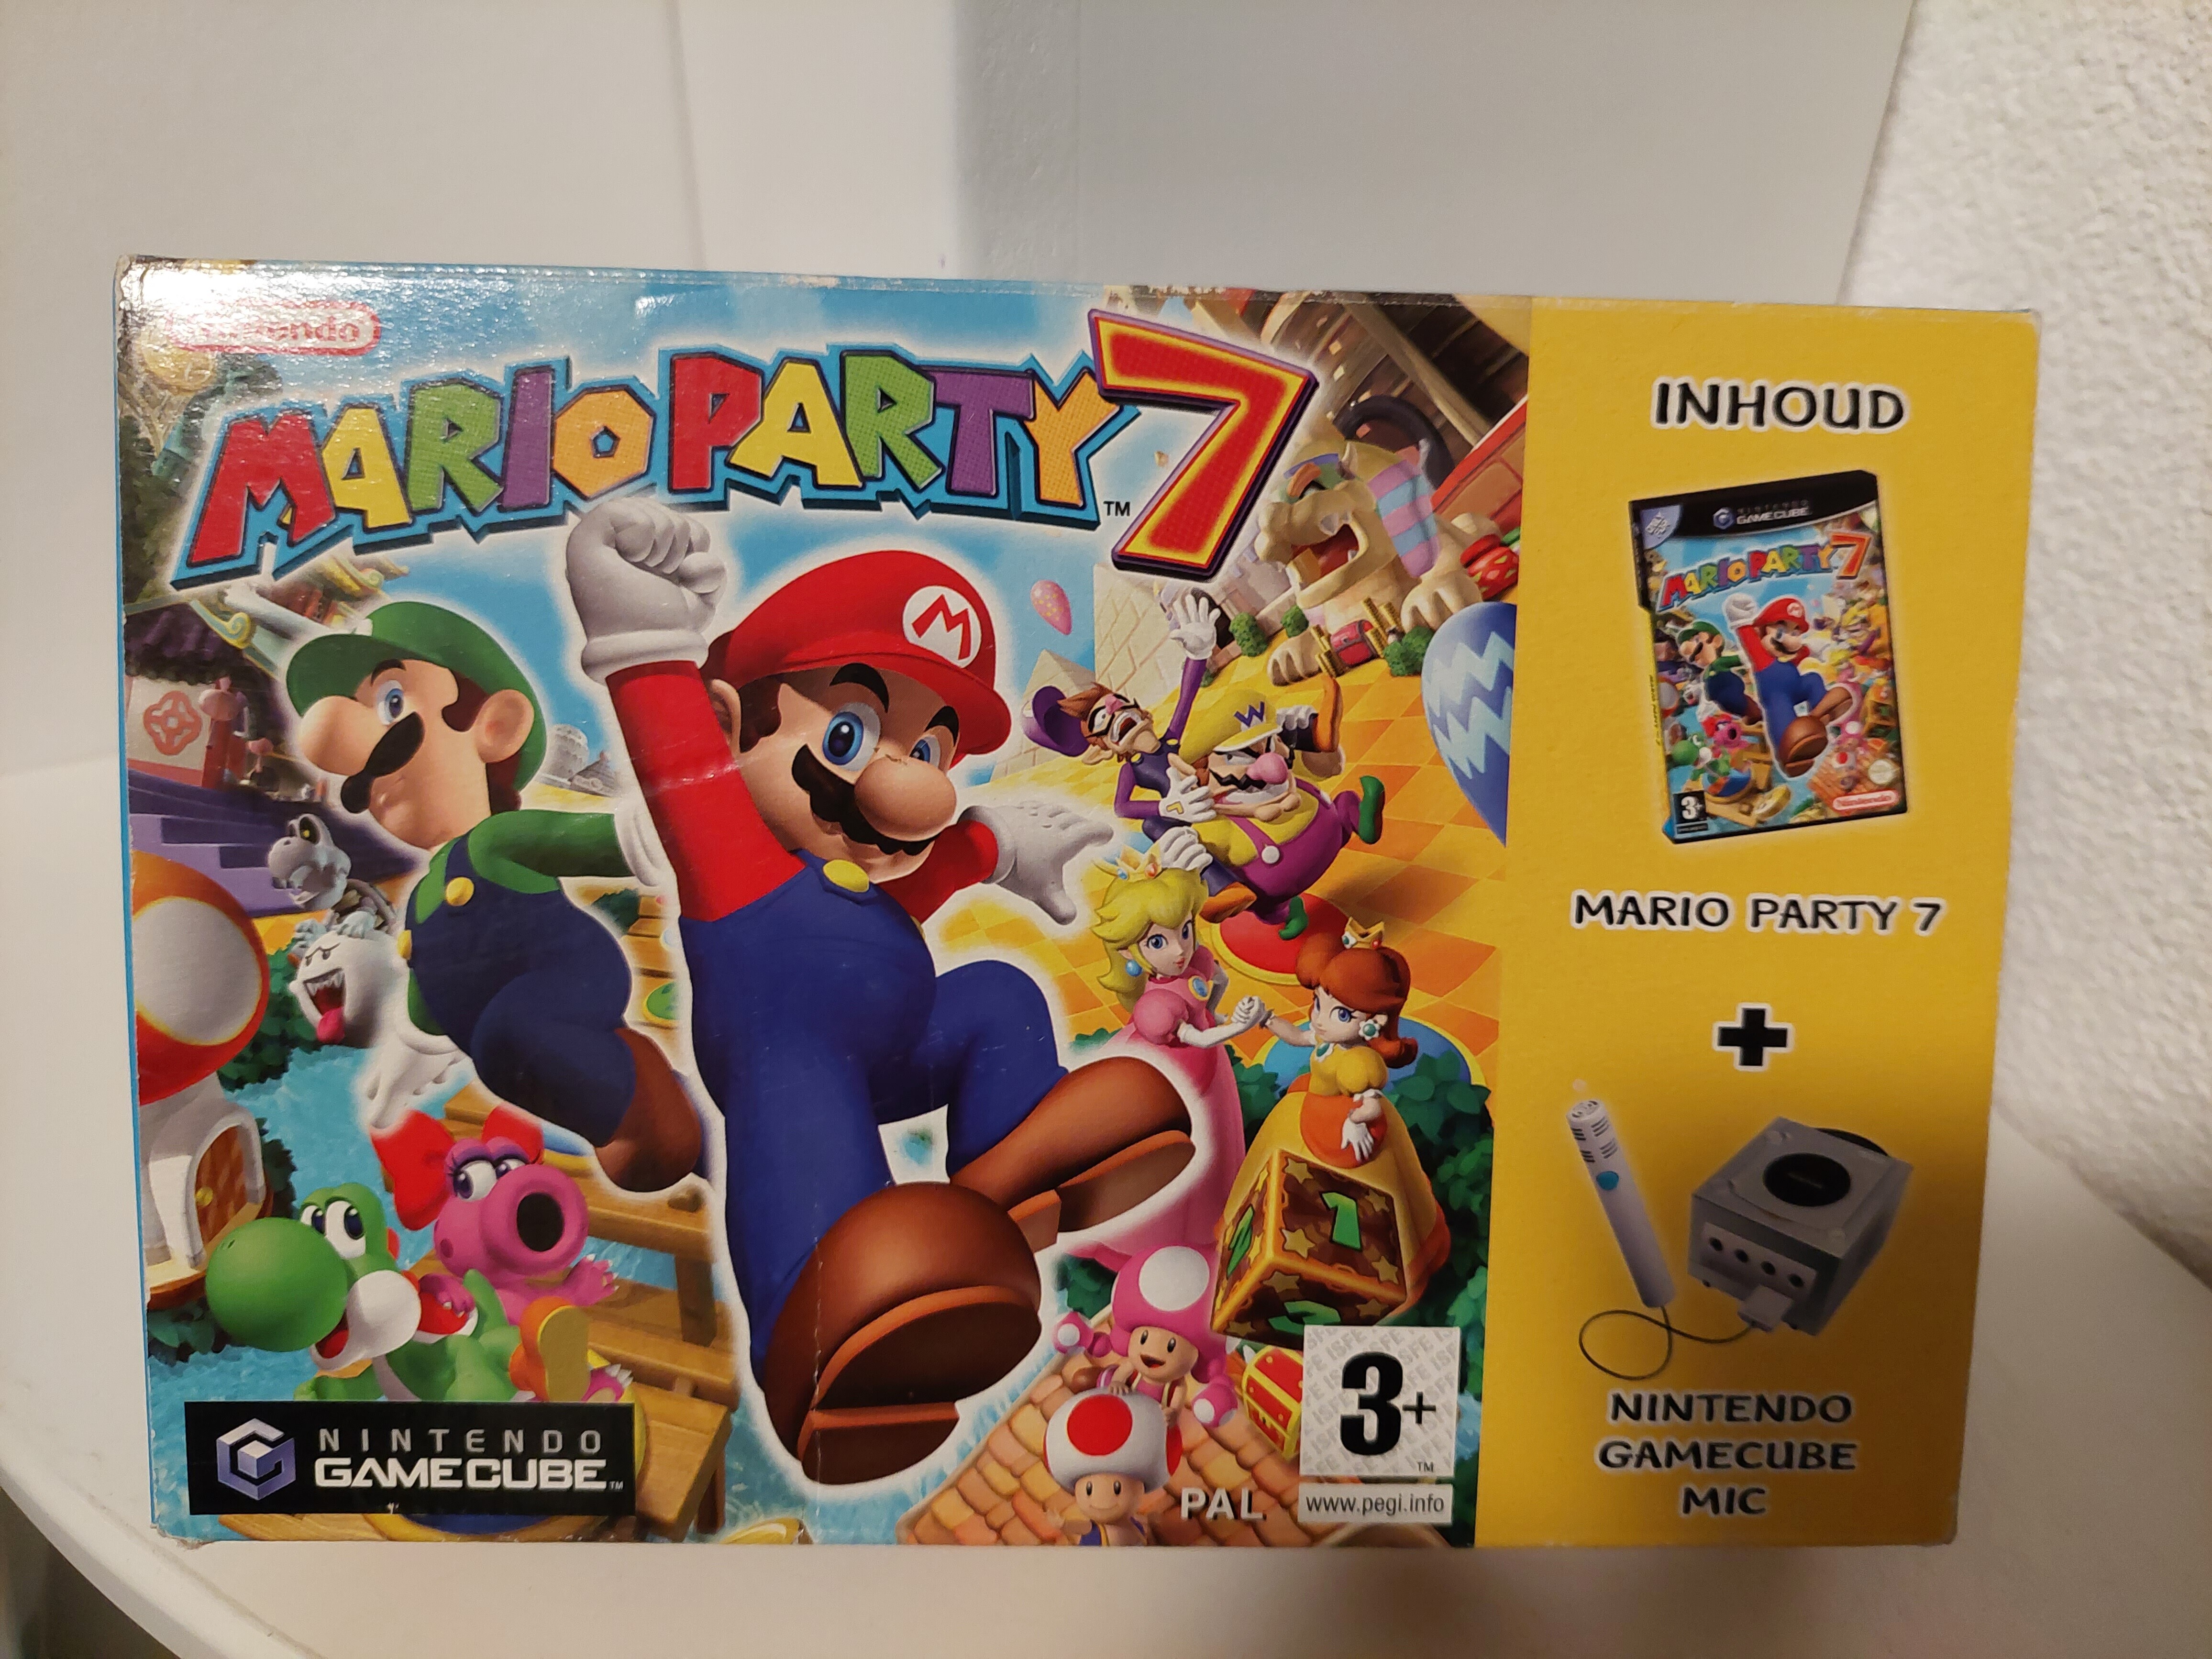  Nintendo GameCube Mario Party 7 Microphone Bundle